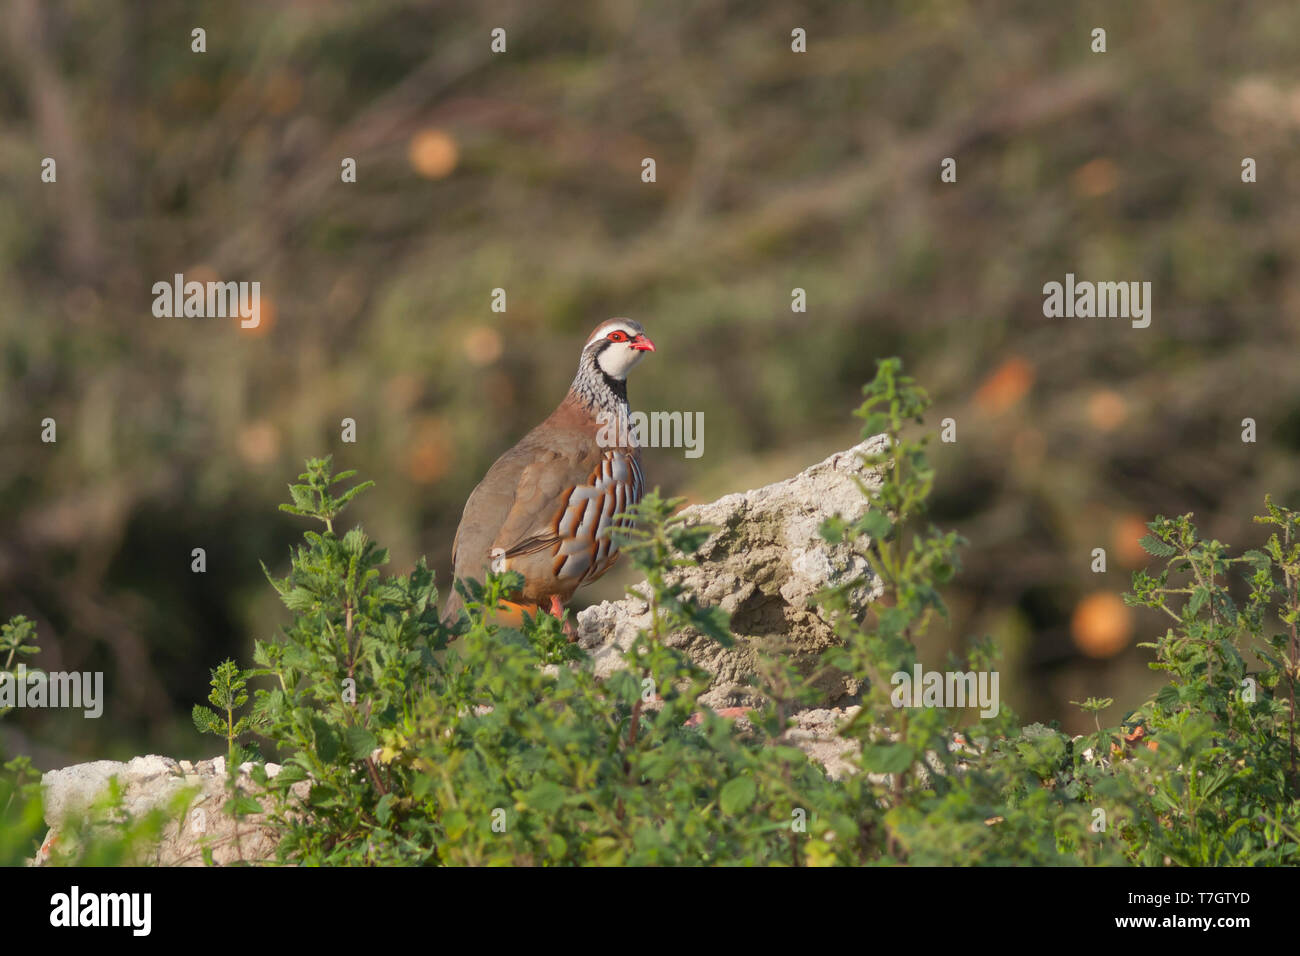 Adult Red-legged Partridge (Alectoris rufa hispanica) in Portugal. Stock Photo